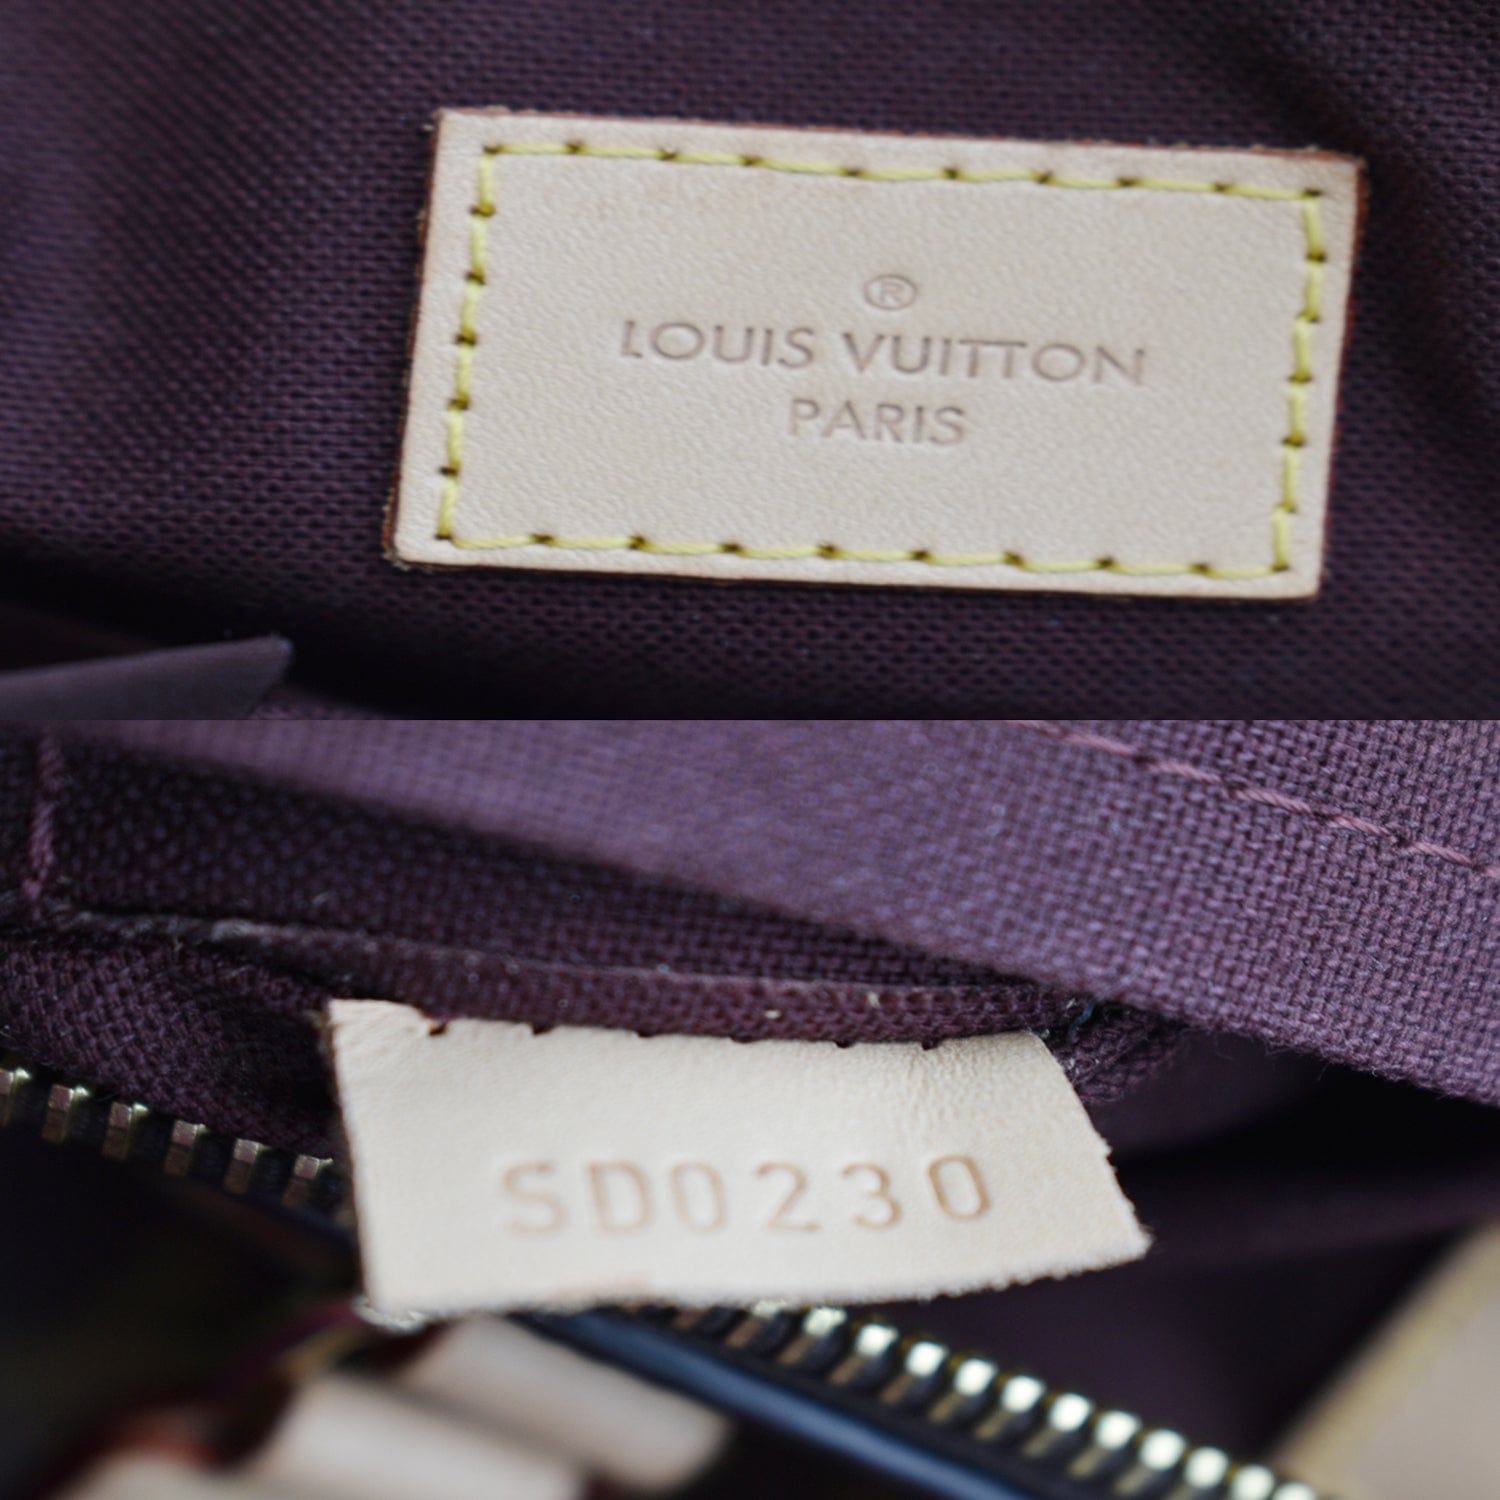 RIVOLI PM & RIVOLI MM New from Louis Vuitton March 2019  Louis vuitton,  Louis vuitton bag, Louis vuitton handbags